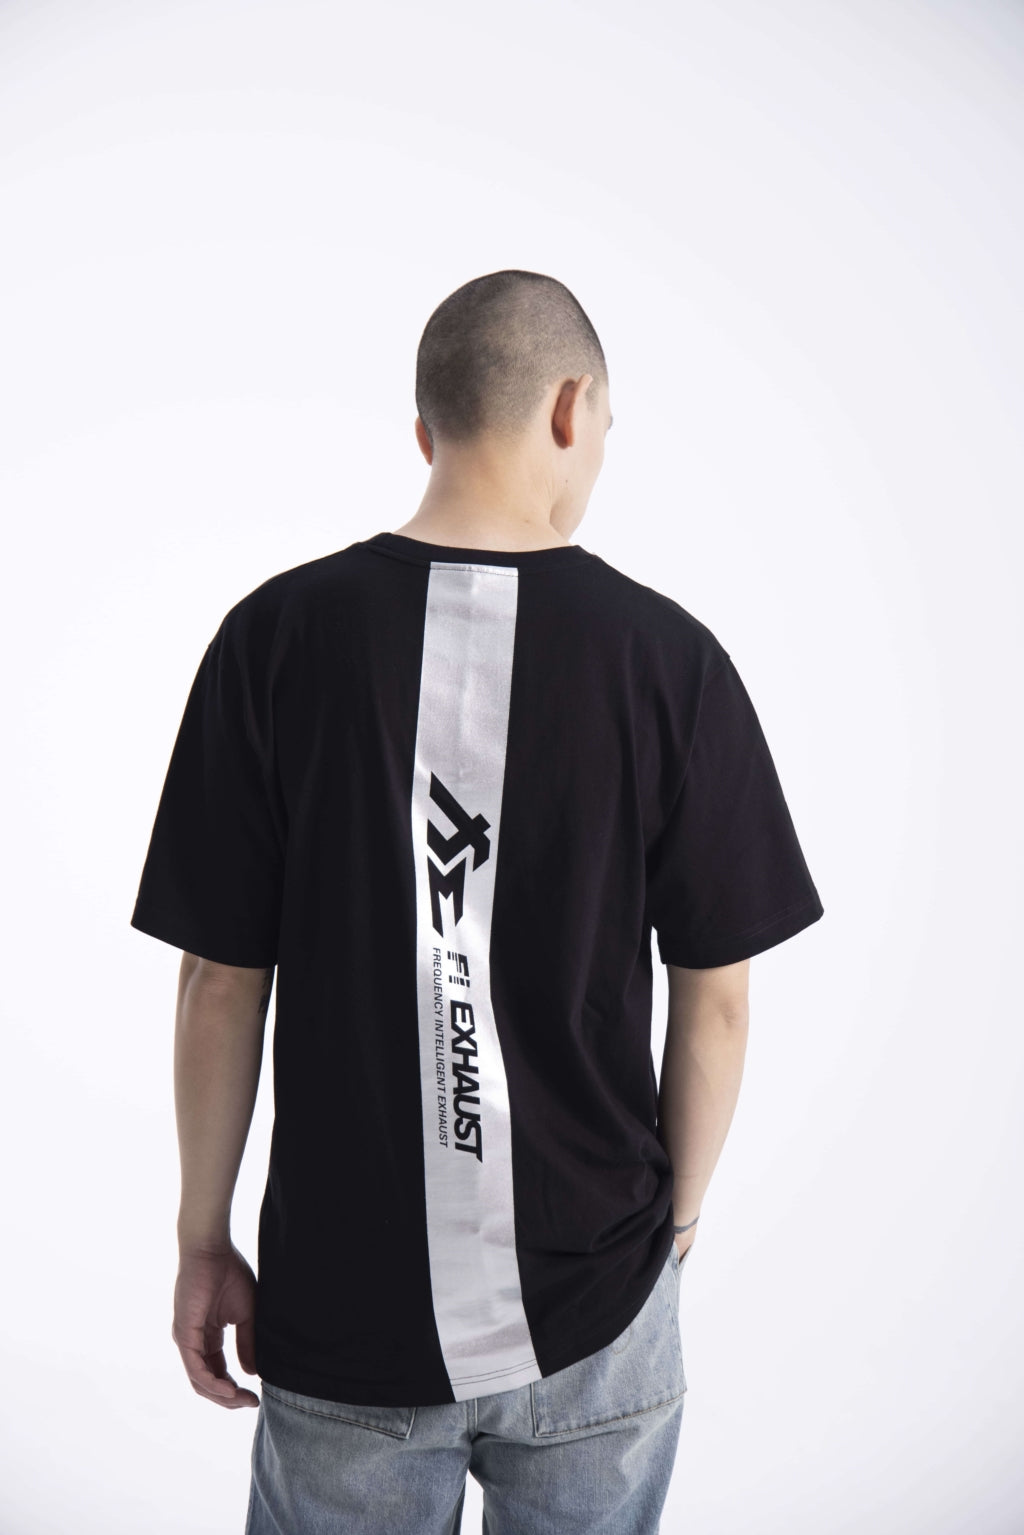 "Finish Line V1 (Silver)" Black Heavyweight Crew Neck T-Shirt [Limited Ed.]